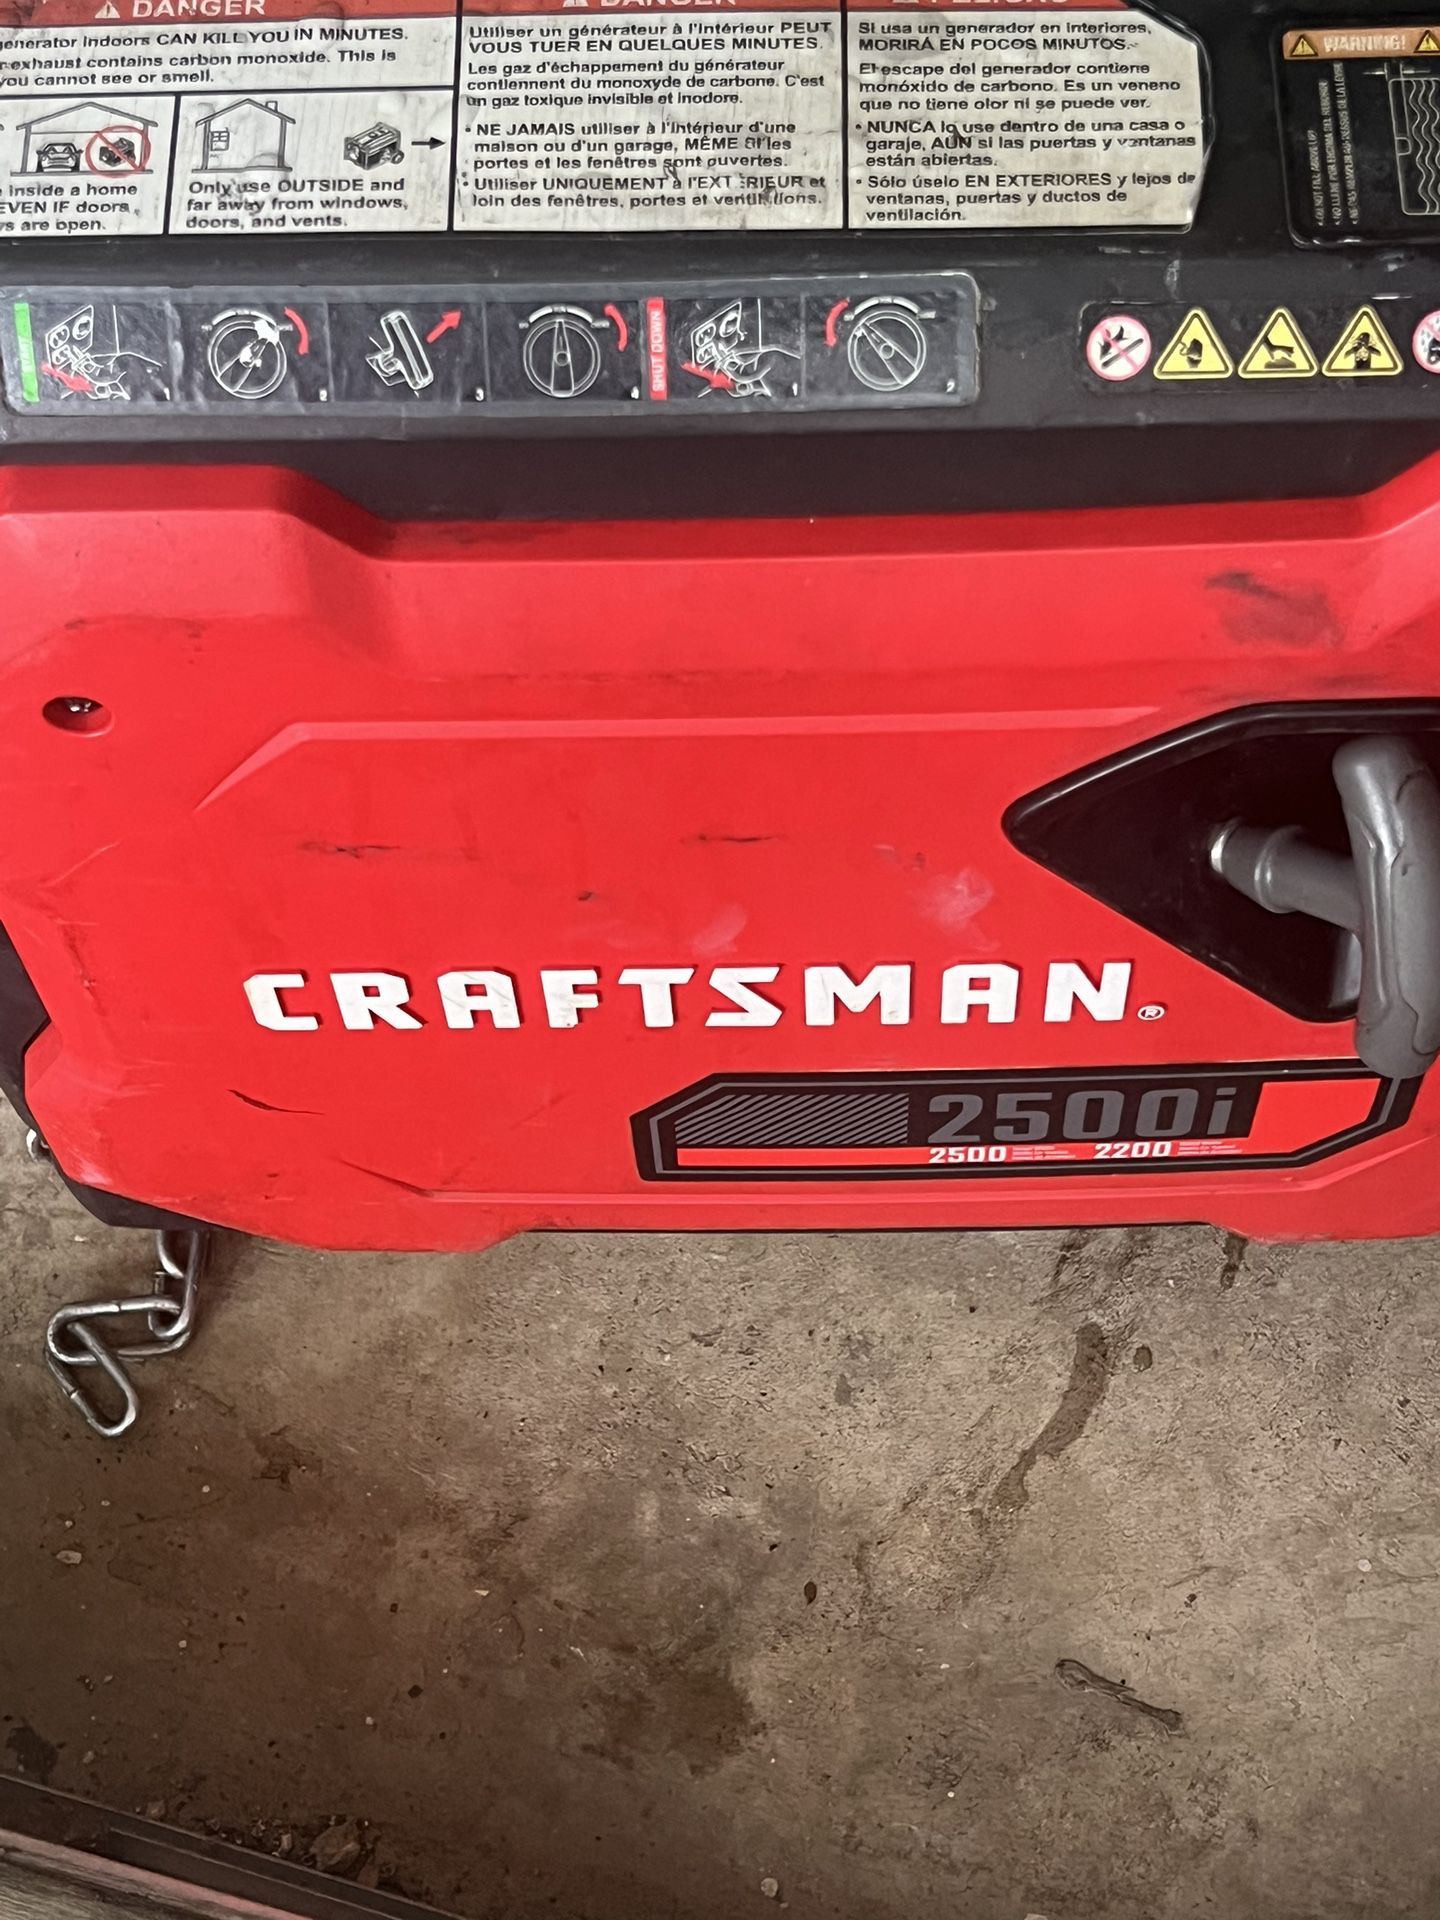 Craftsman Generator 2500I